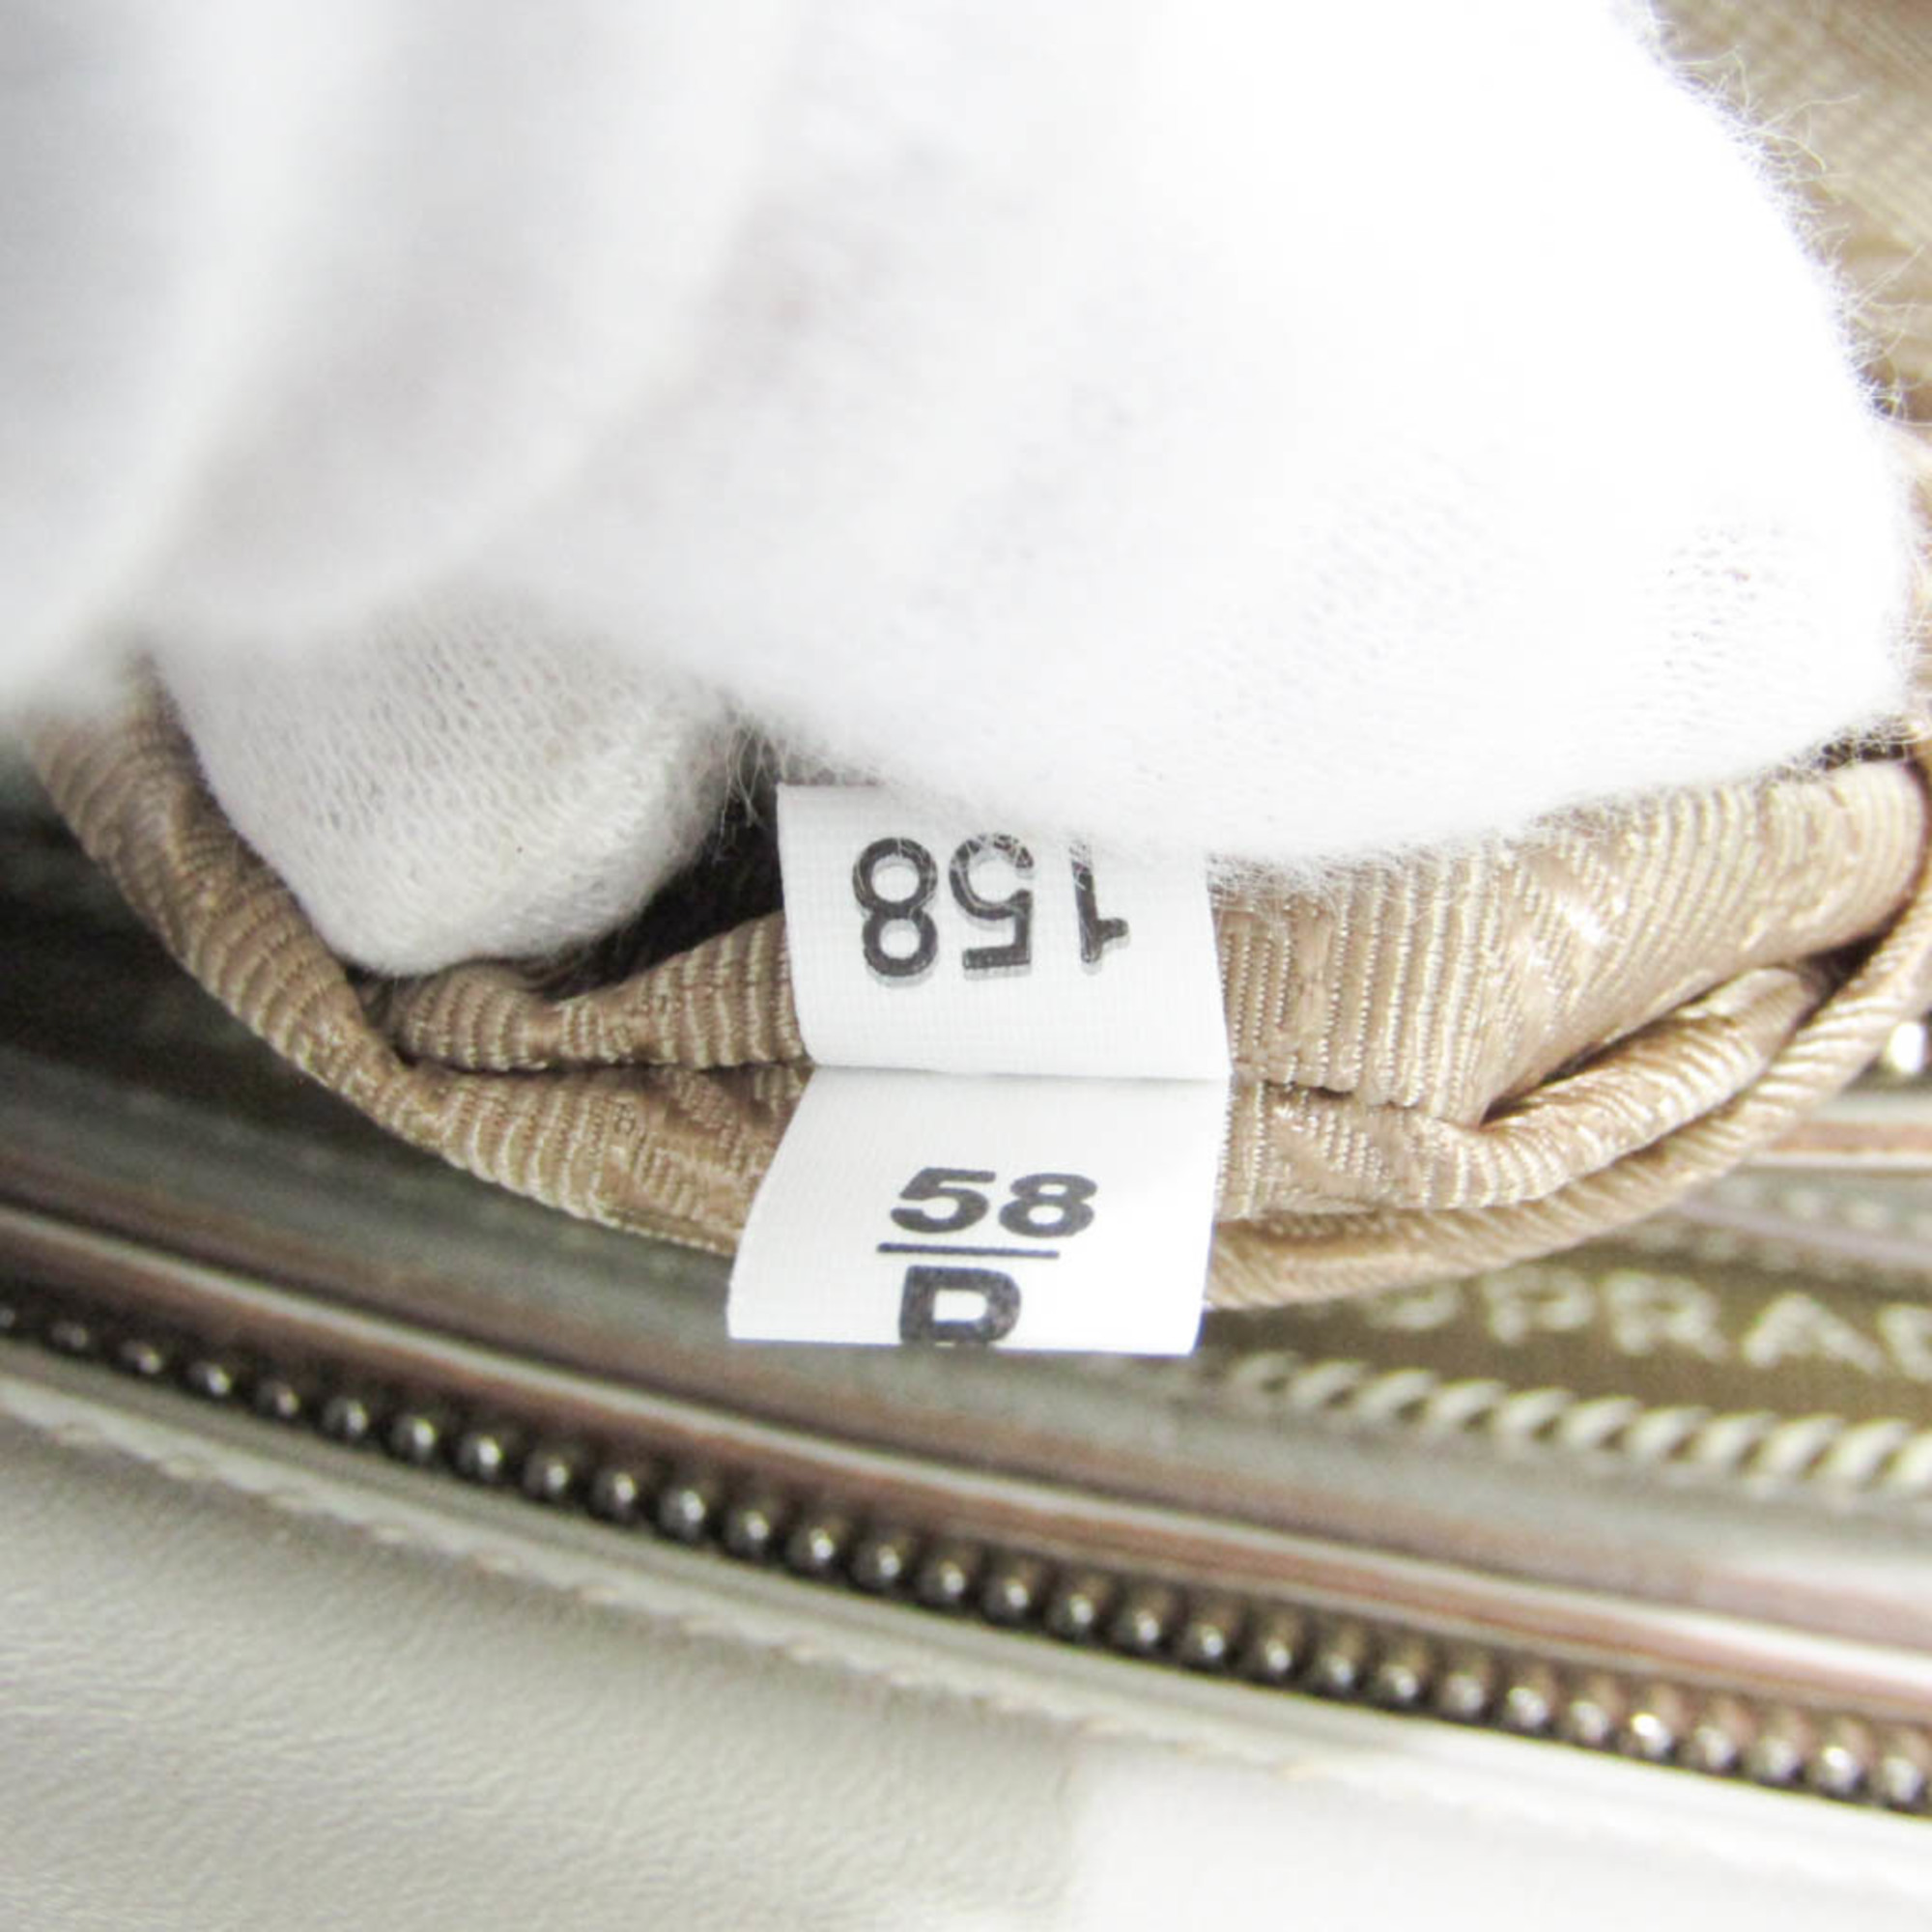 Prada Canapa City B1801K Women's Leather,Canvas Handbag,Shoulder Bag Light Beige,Light Gray